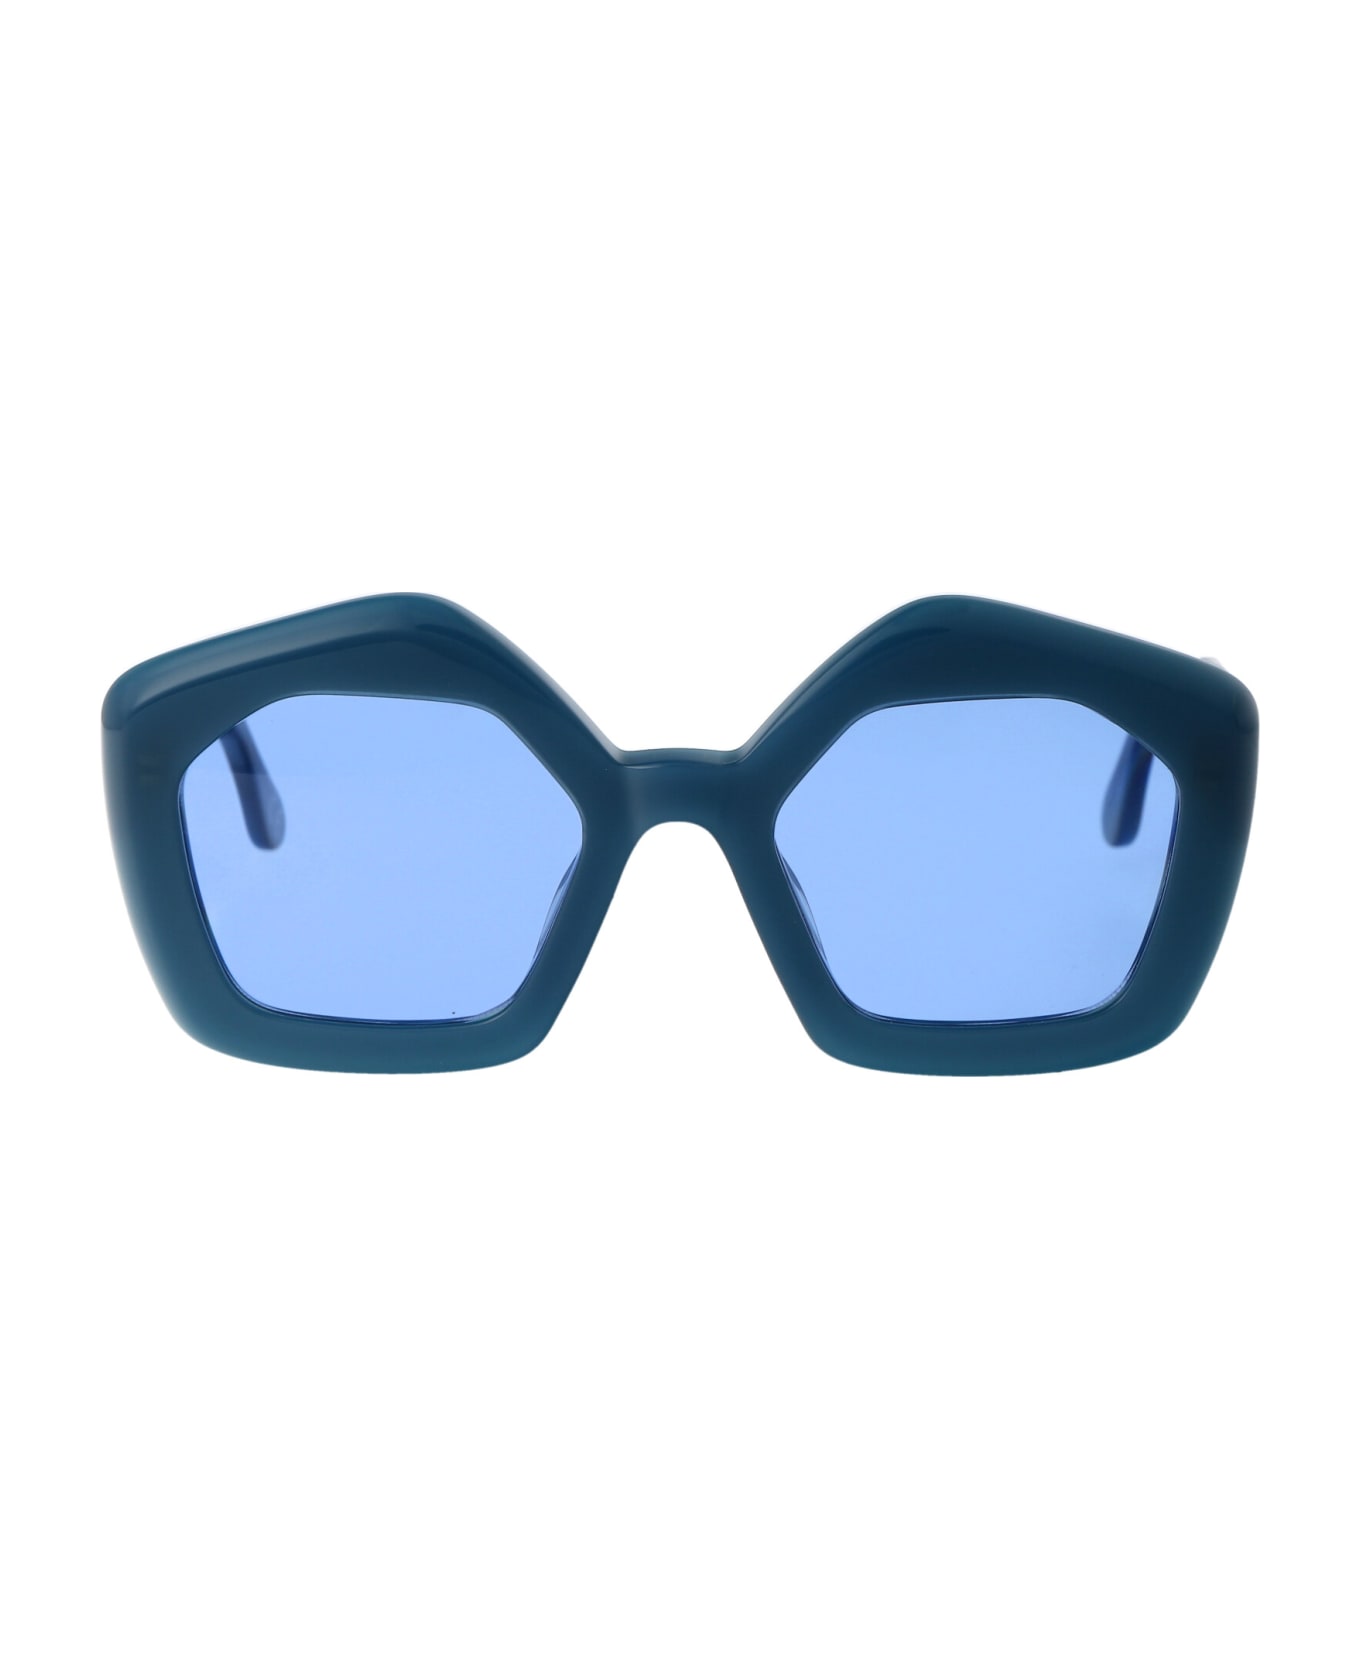 Marni Eyewear Laughing Waters Sunglasses - BLUE